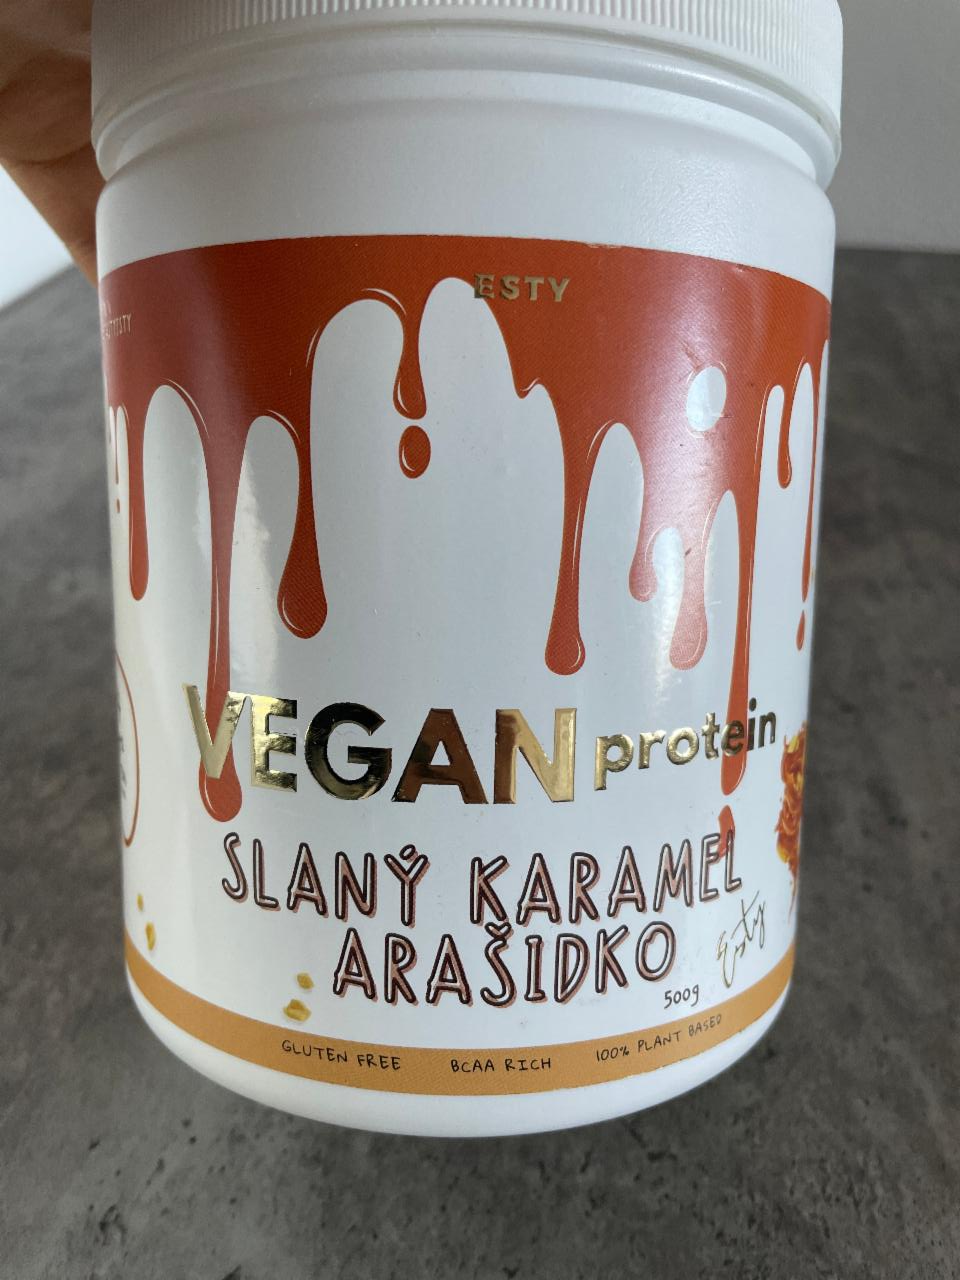 Fotografie - Vegan proteín slaný karamel arašidko Esty